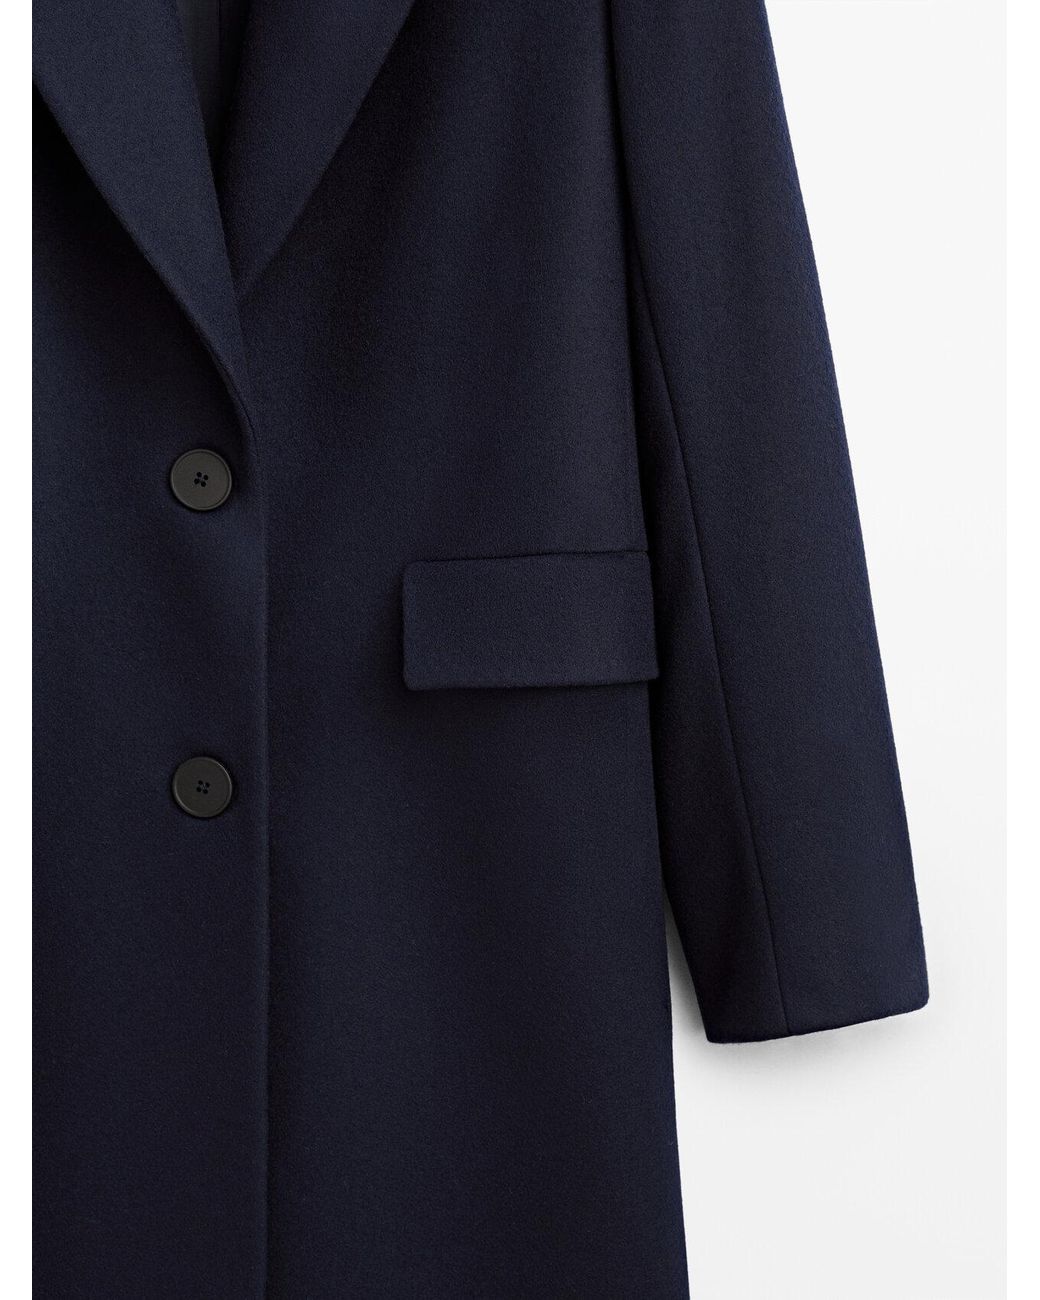 MASSIMO DUTTI Navy Blue Smart Wool Coat | Lyst